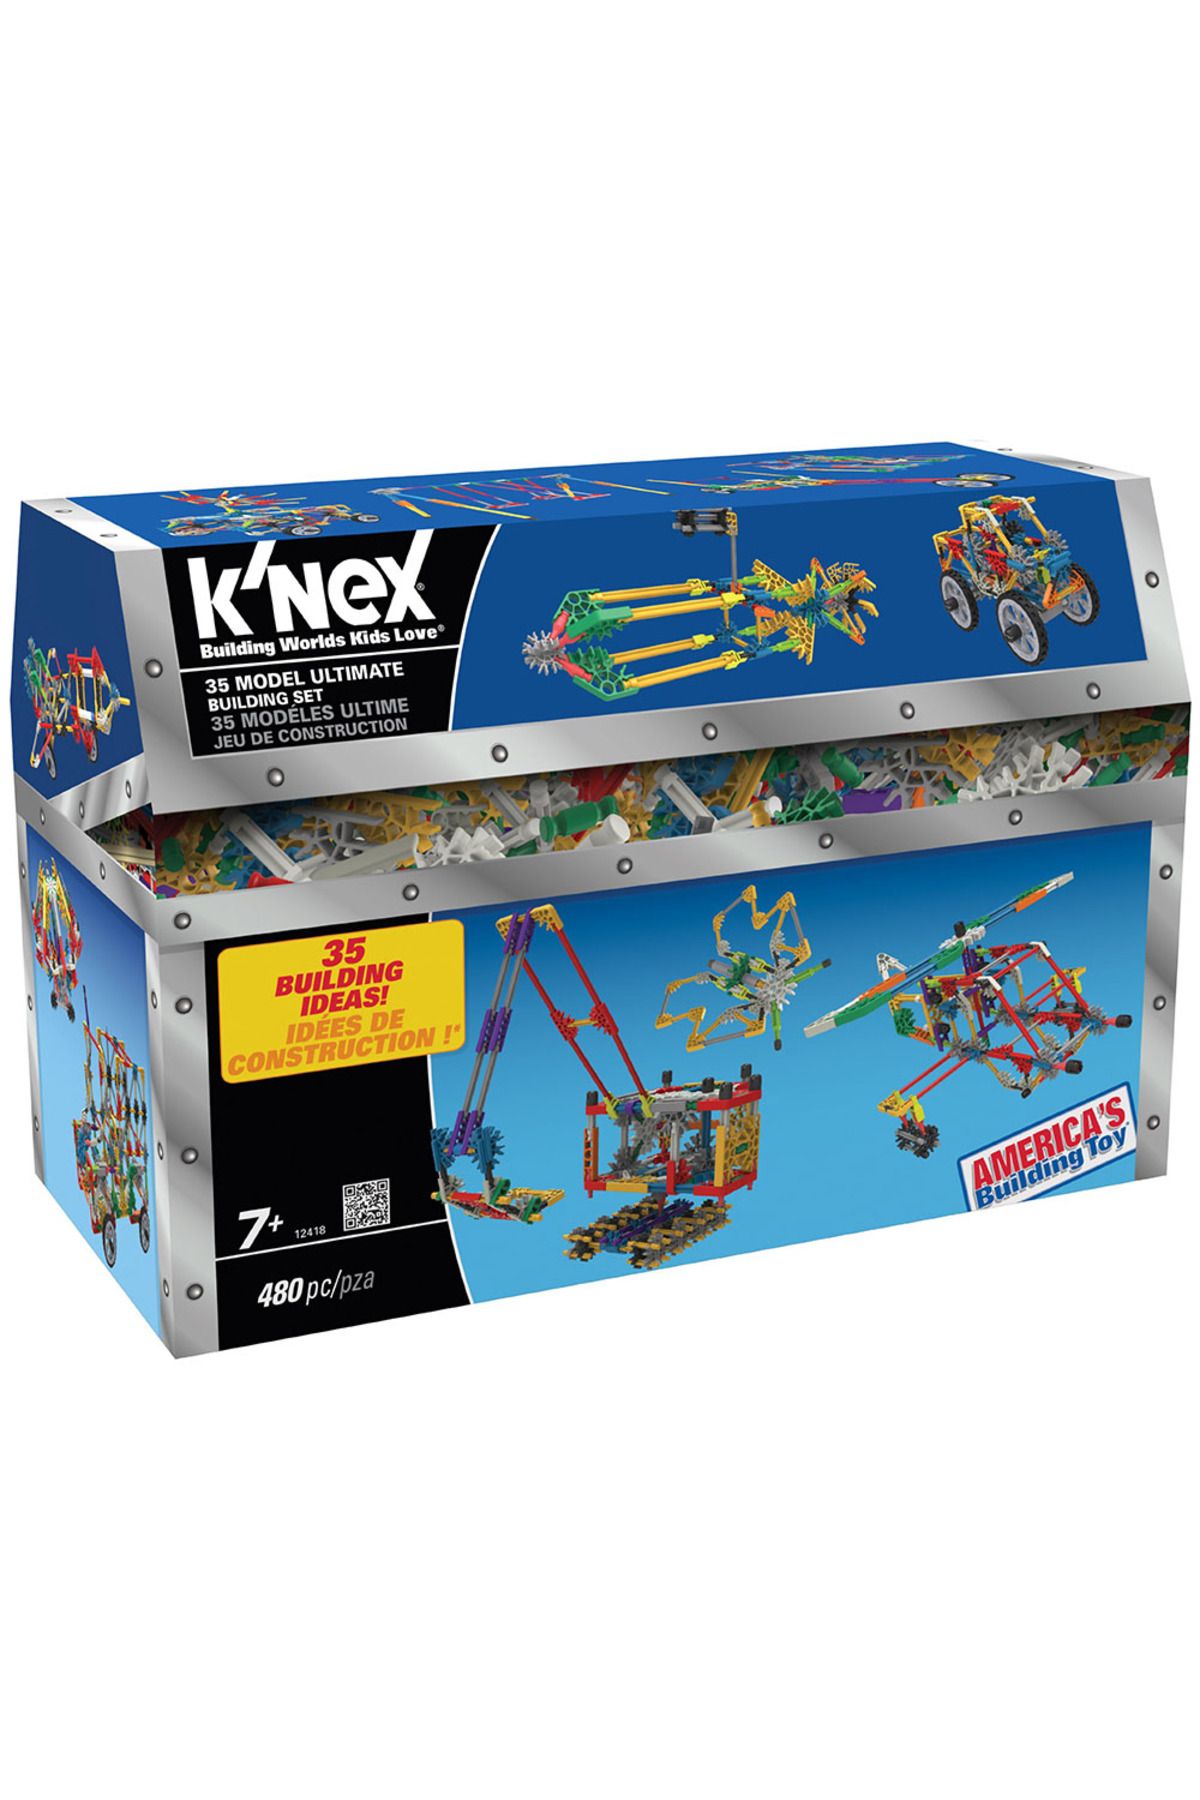 Knex K’Nex 35 Farklı Ultimate Model Building Set Knex